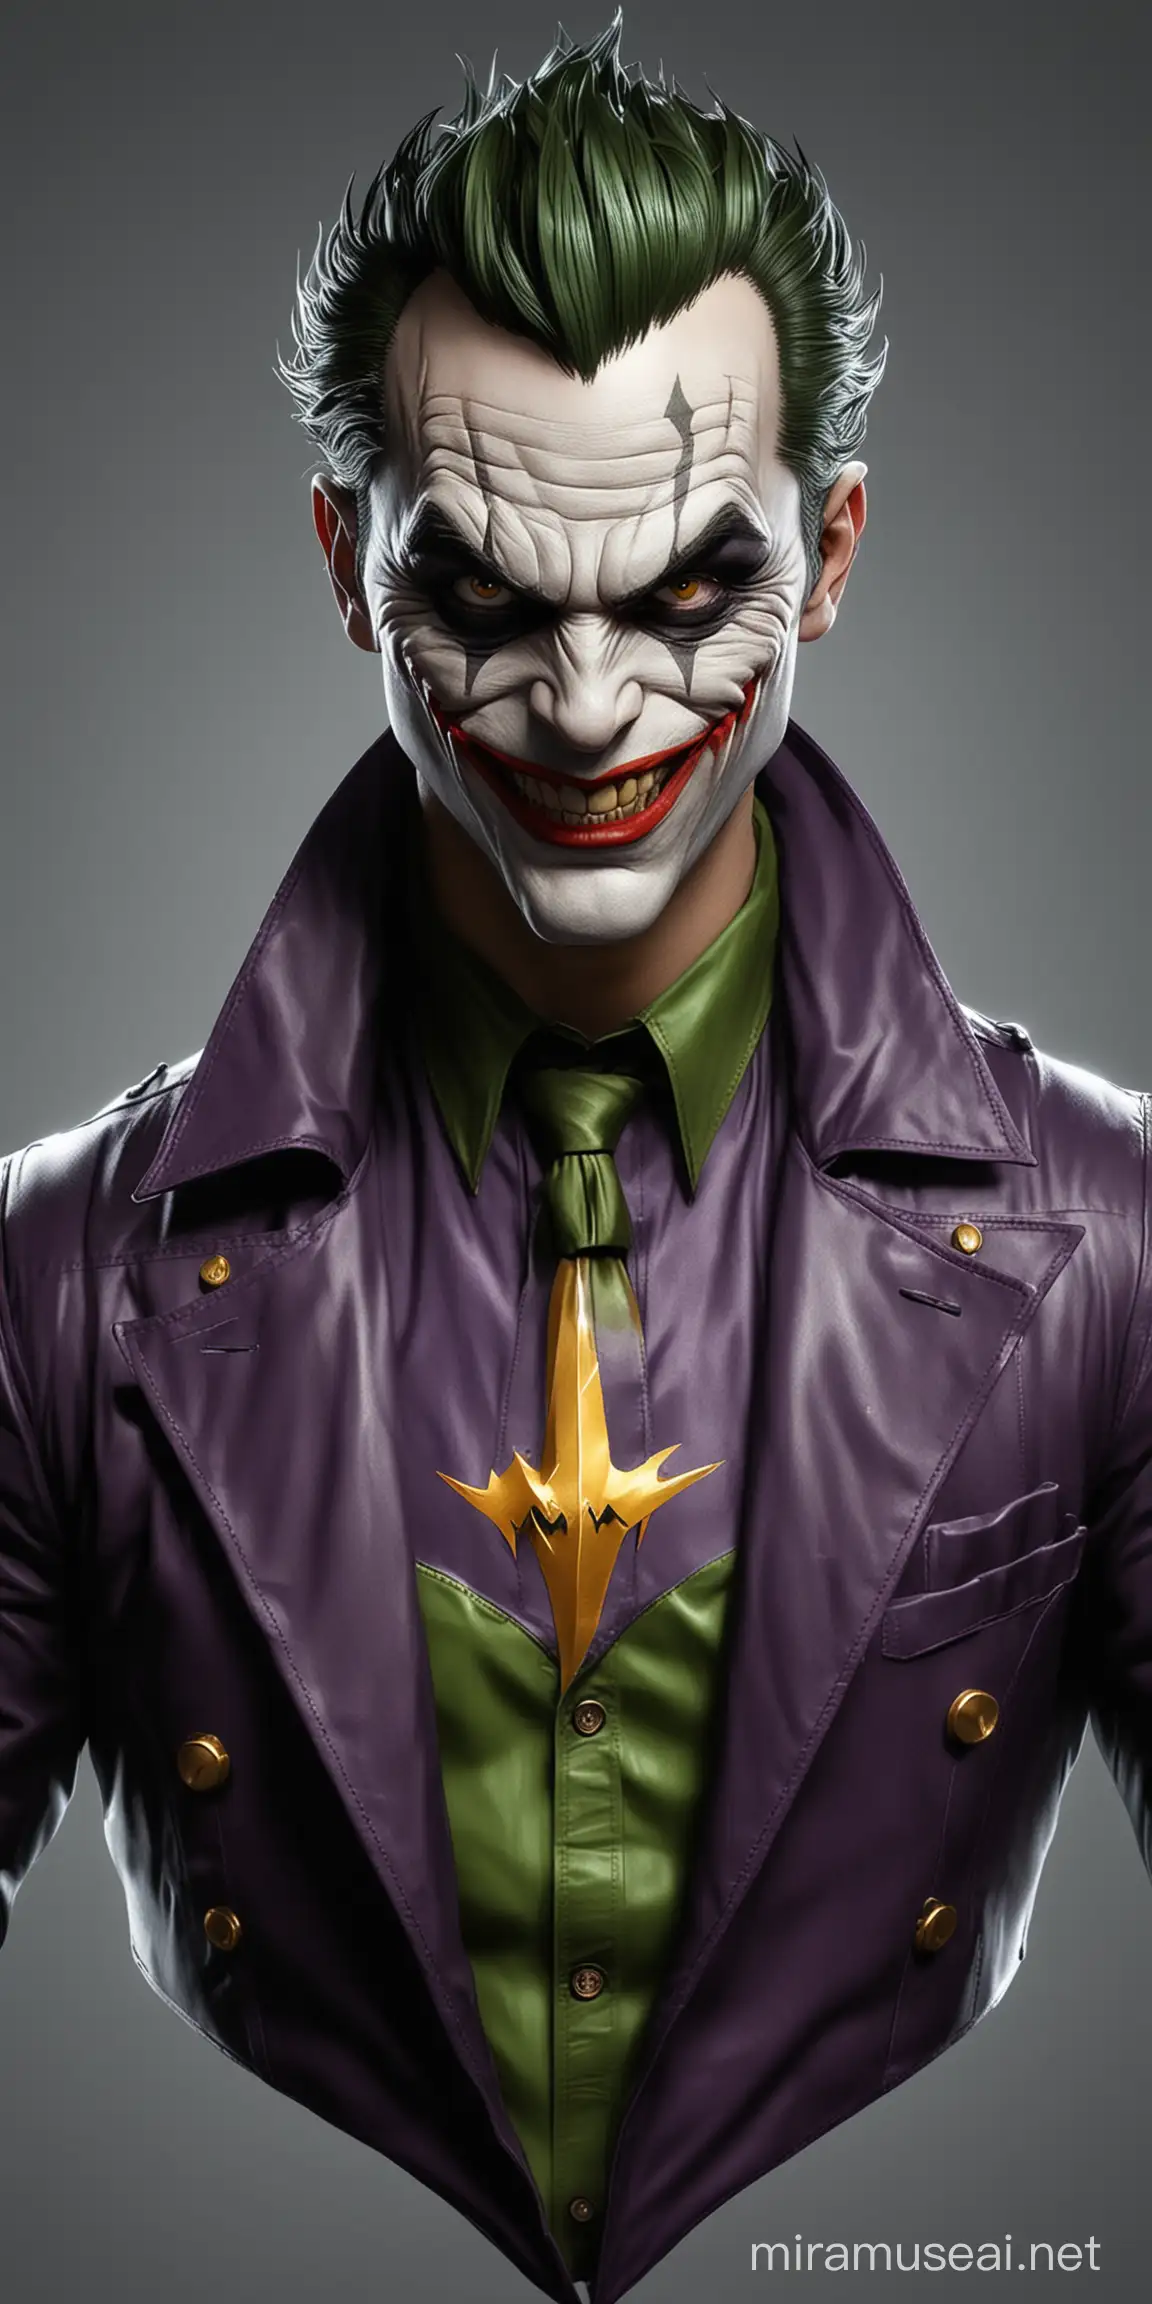 Adult Cartoon Crime Fighter with Joker Features and Lightning Bolt Emblem